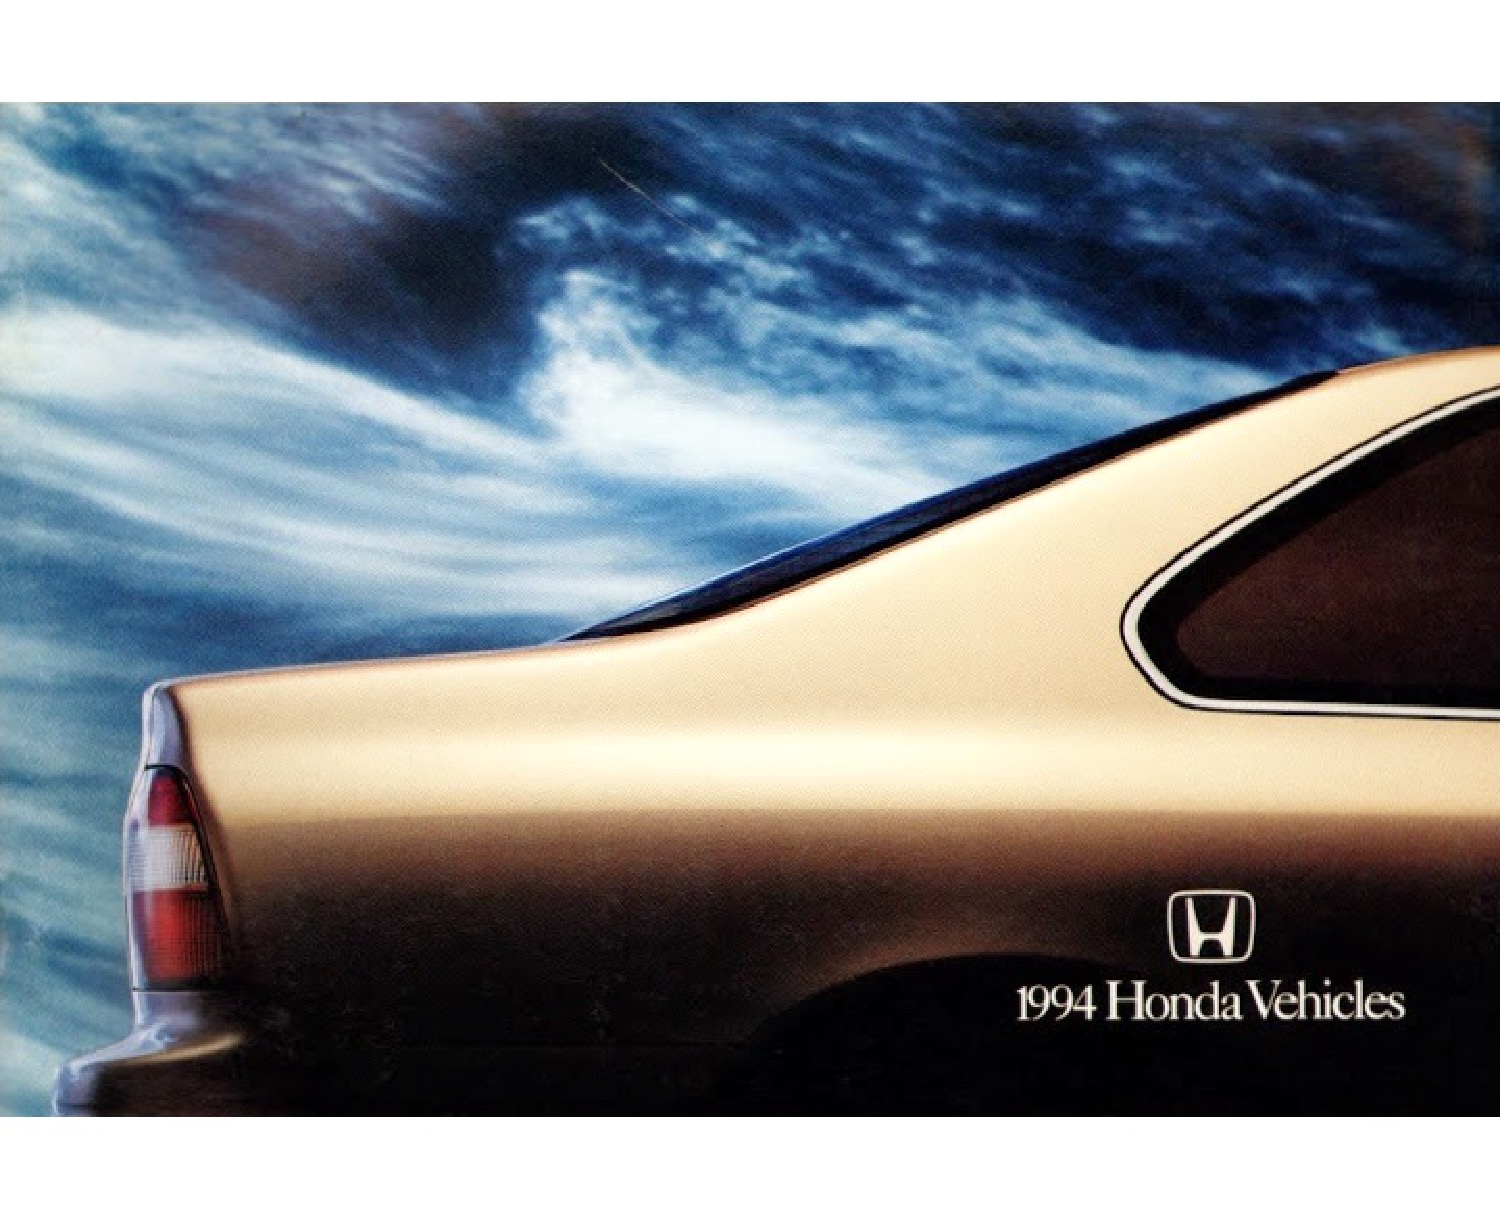 1994 Honda Model Range Brochure